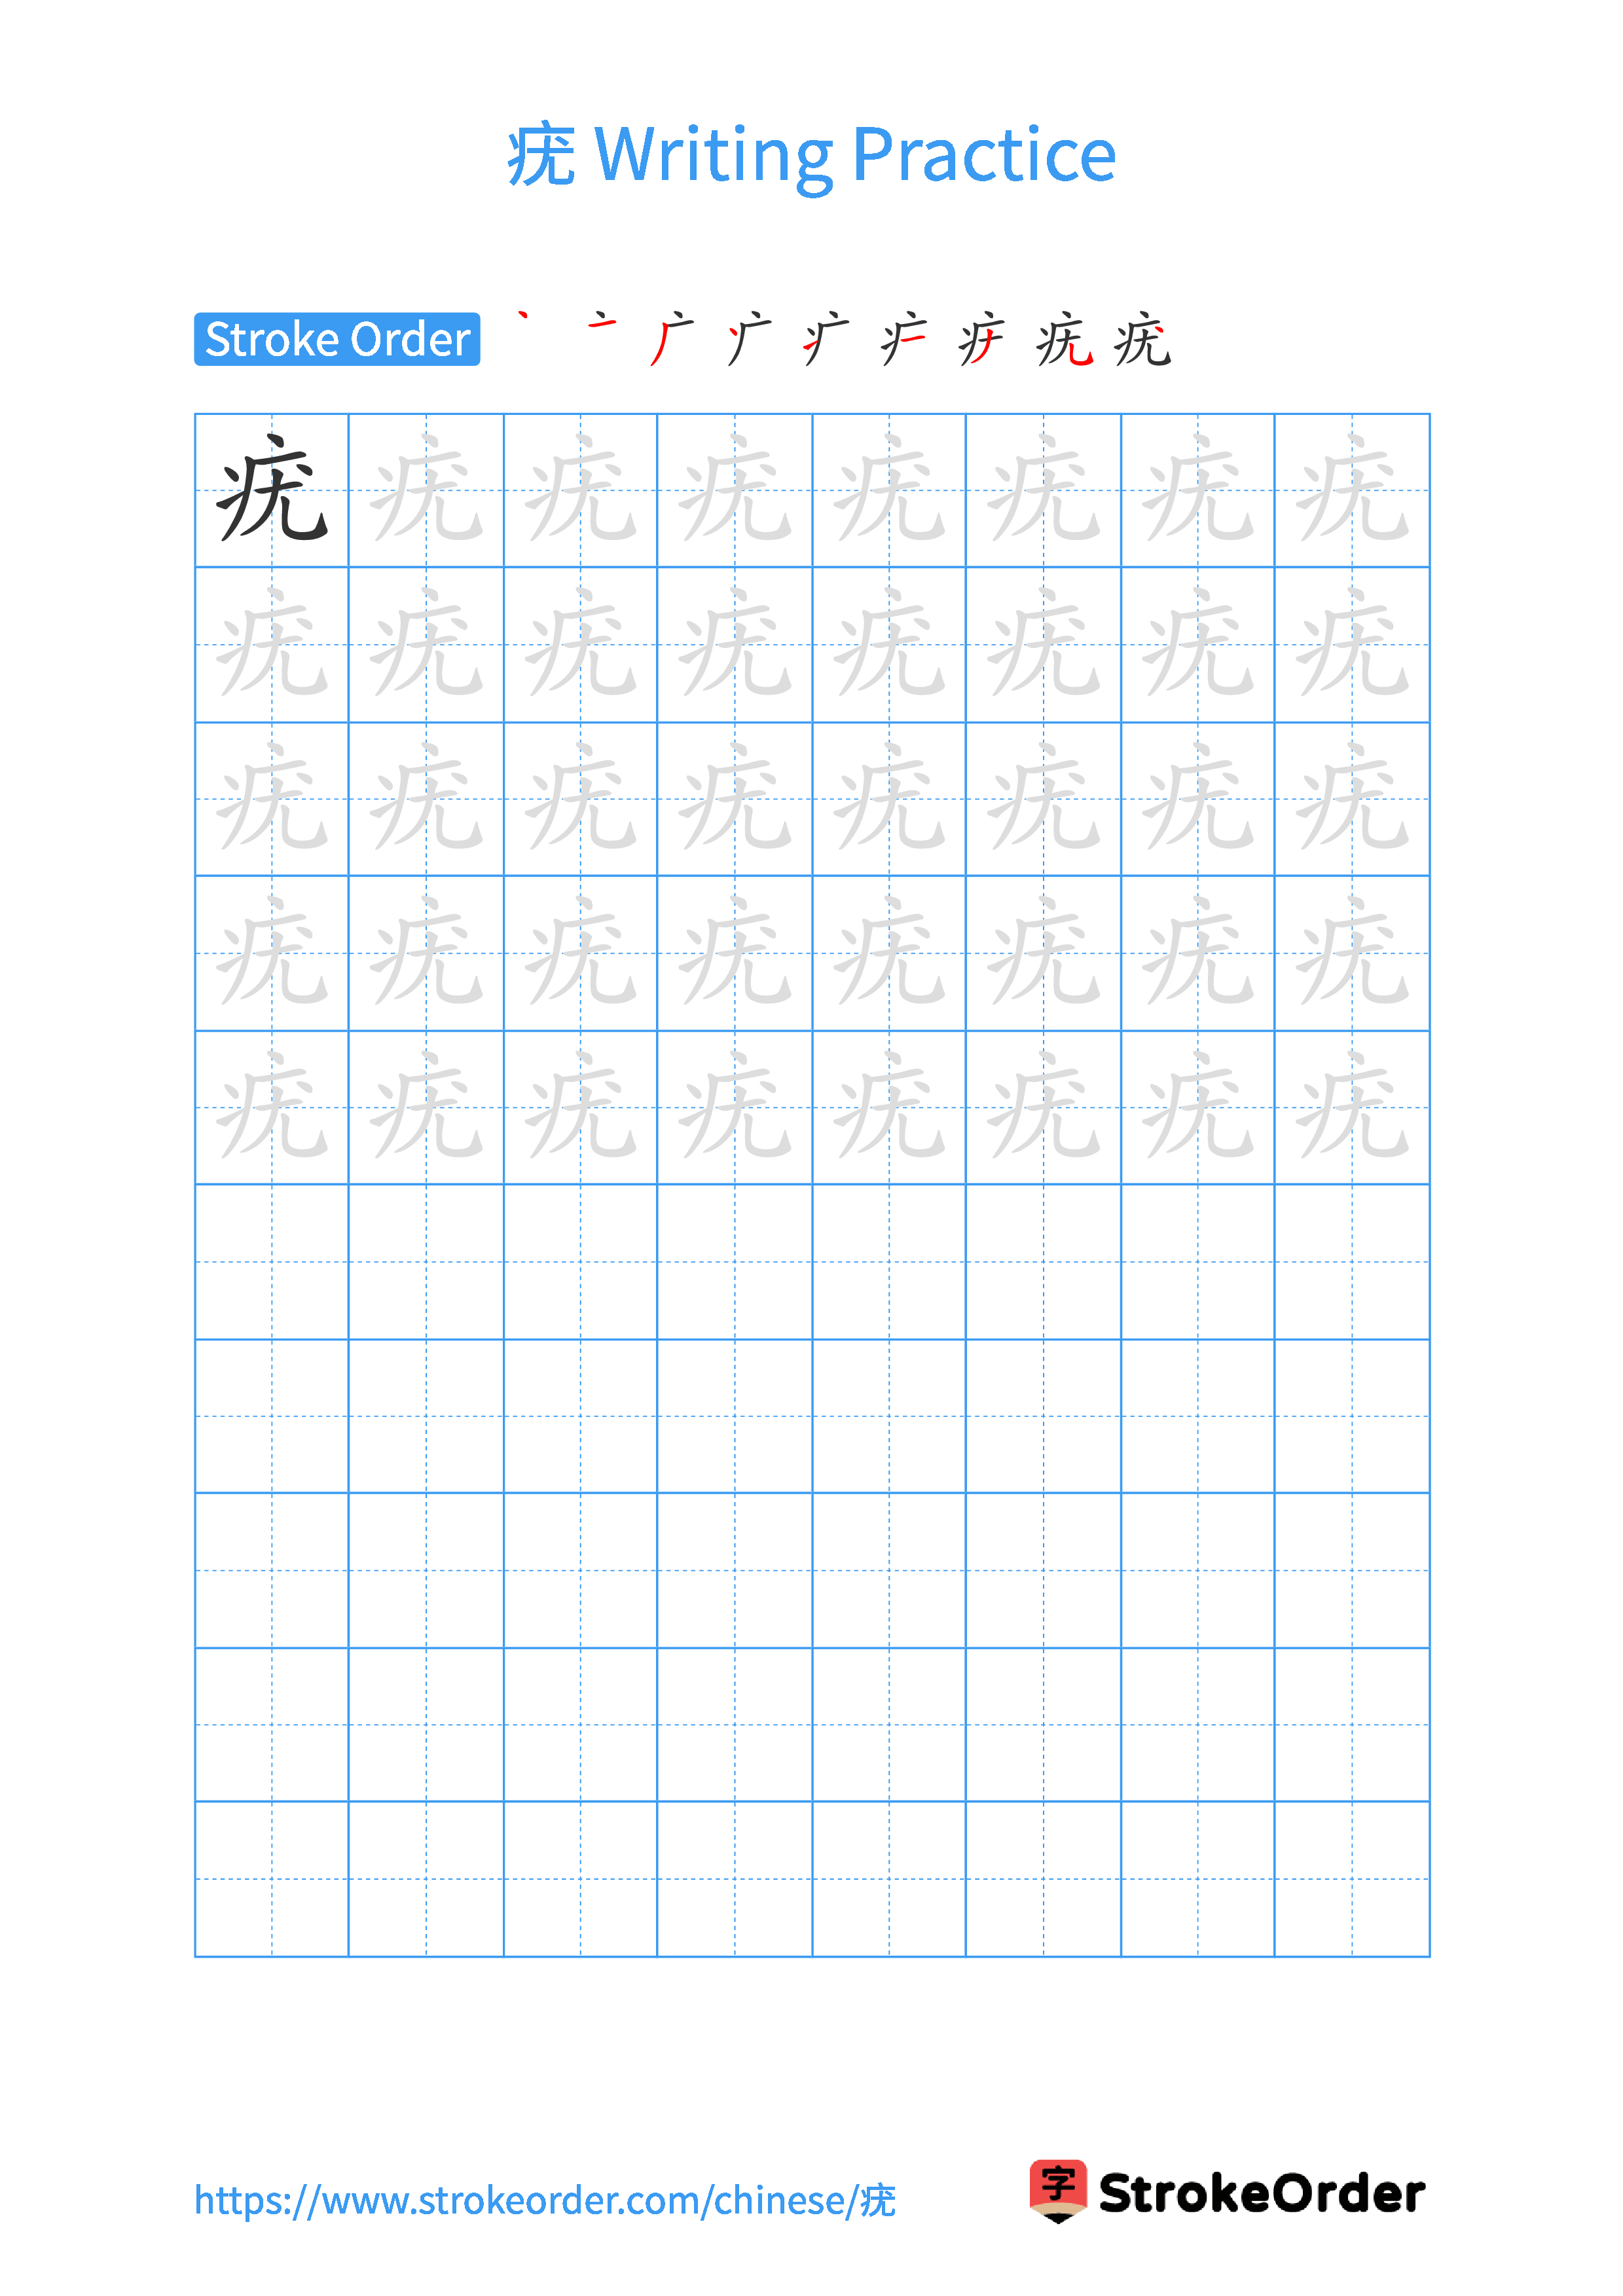 Printable Handwriting Practice Worksheet of the Chinese character 疣 in Portrait Orientation (Tian Zi Ge)